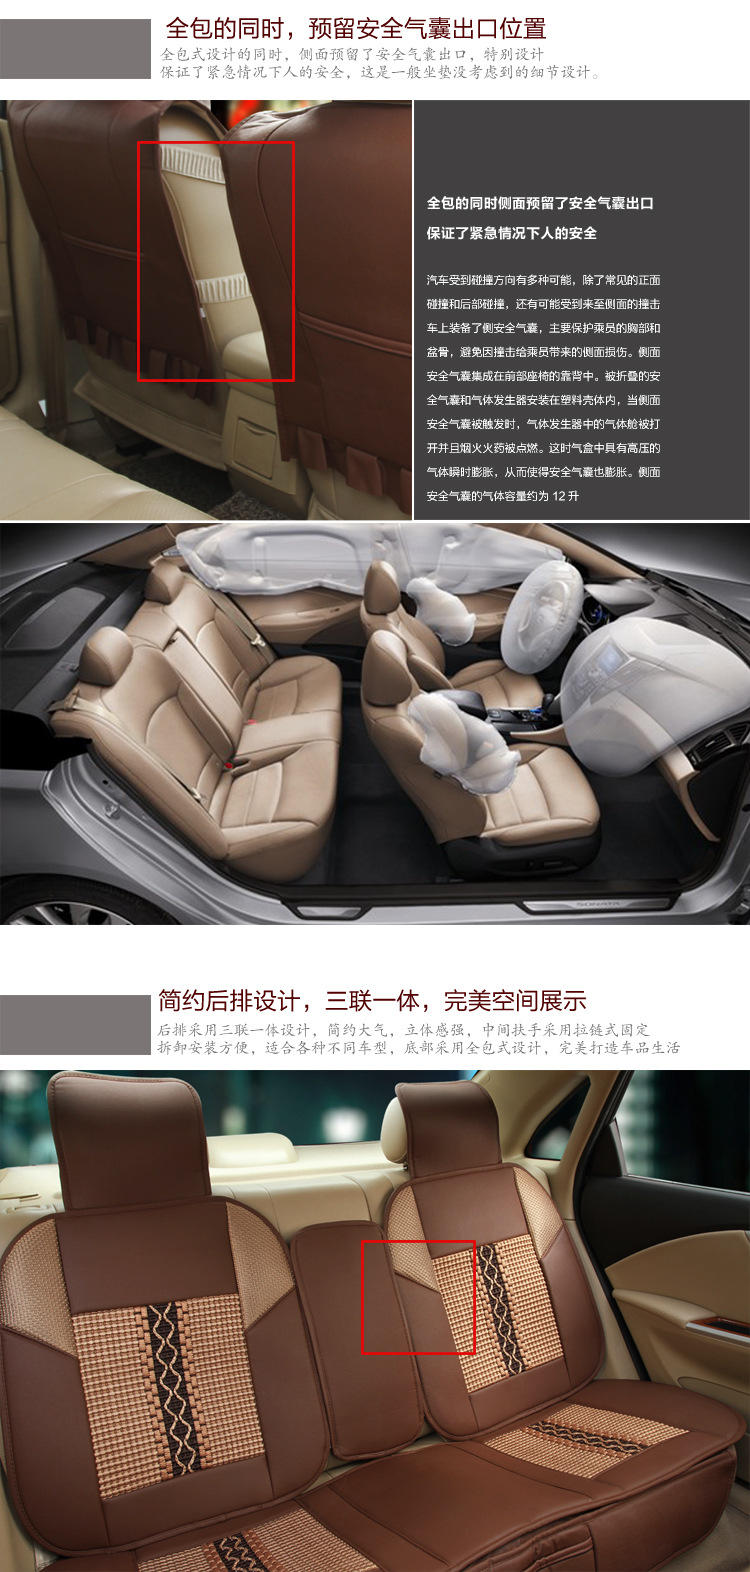 BX欧式高档仿真皮冰丝汽车坐垫 四季通用新座垫汽车用品饰品